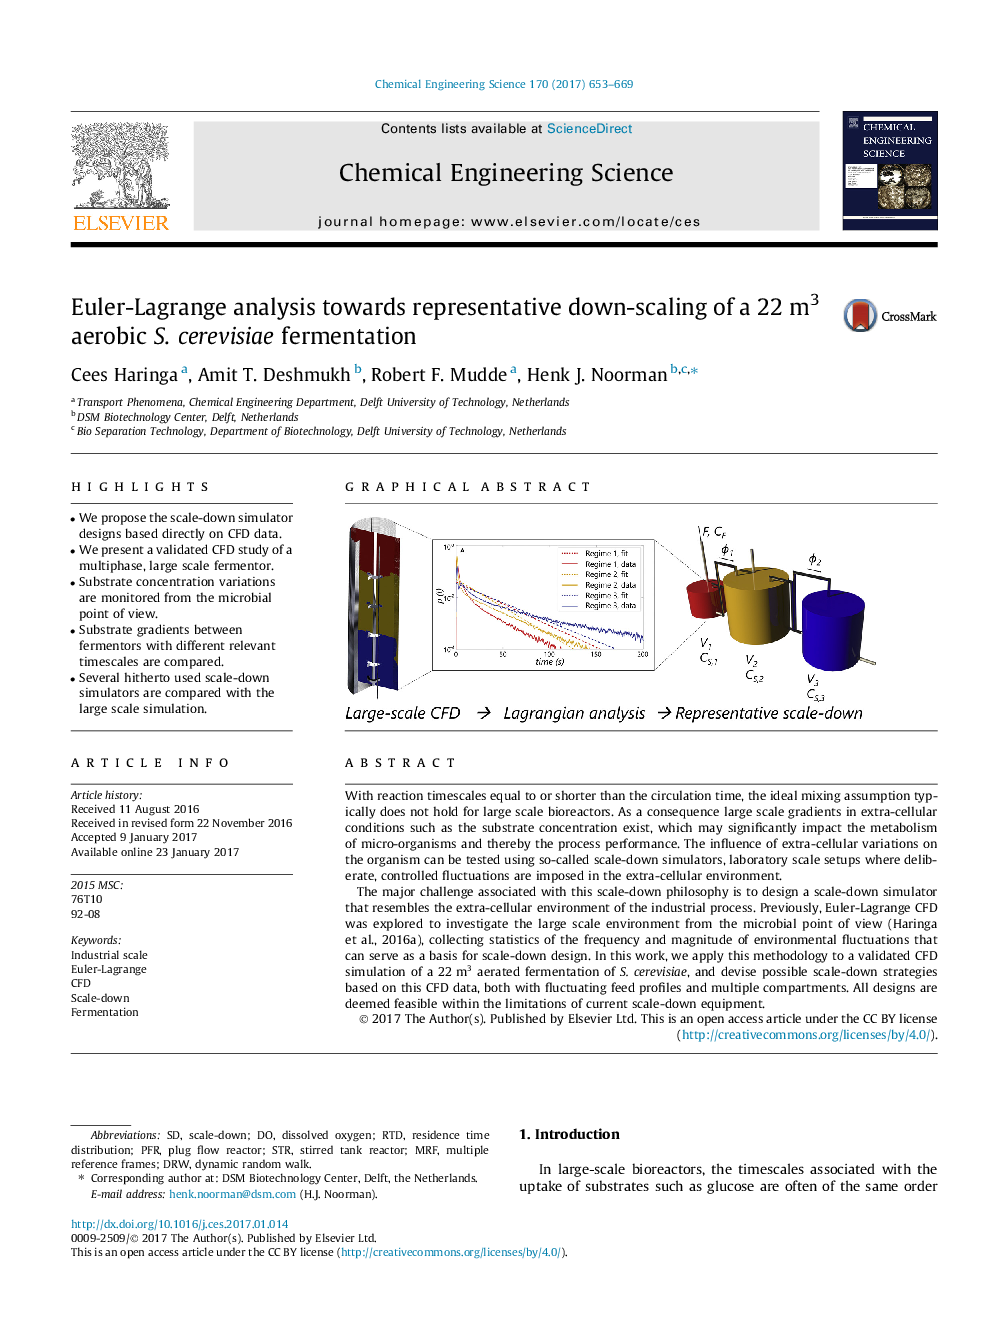 Euler-Lagrange analysis towards representative down-scaling of a 22 m3 aerobic S. cerevisiae fermentation